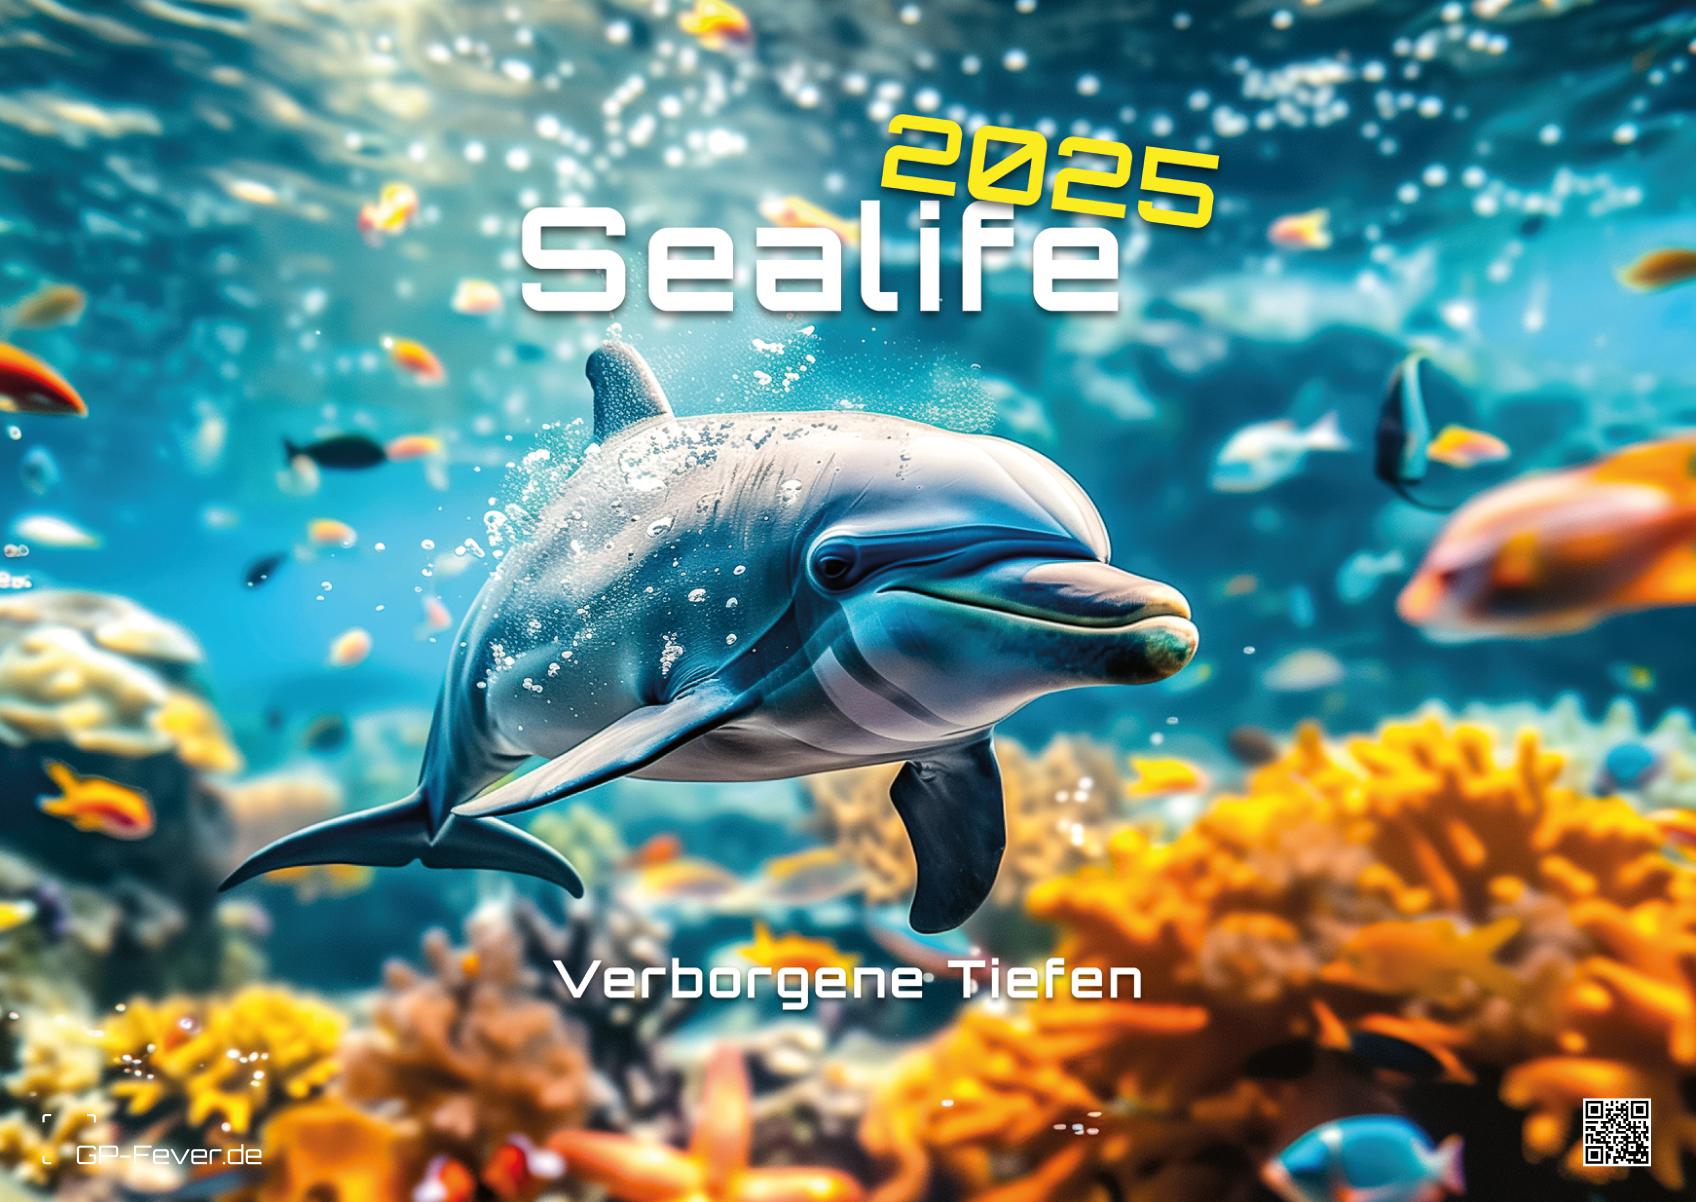 Sealife - verborgene Tiefen - 2025 - Kalender